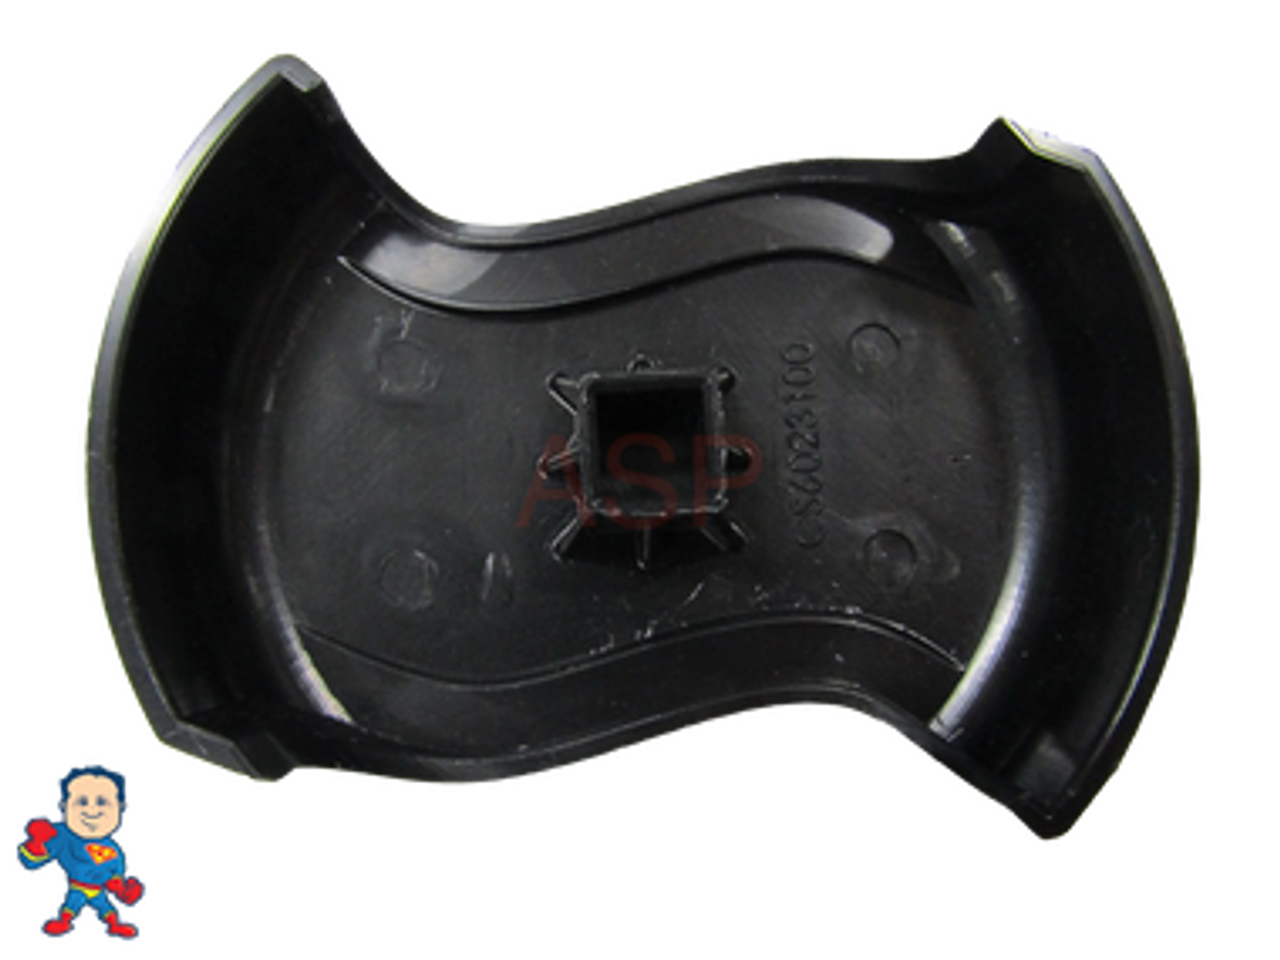 Cal Spa Diverter Valve Kit O-Rings Cap & Upgrade Knob Hot Tub How To Video